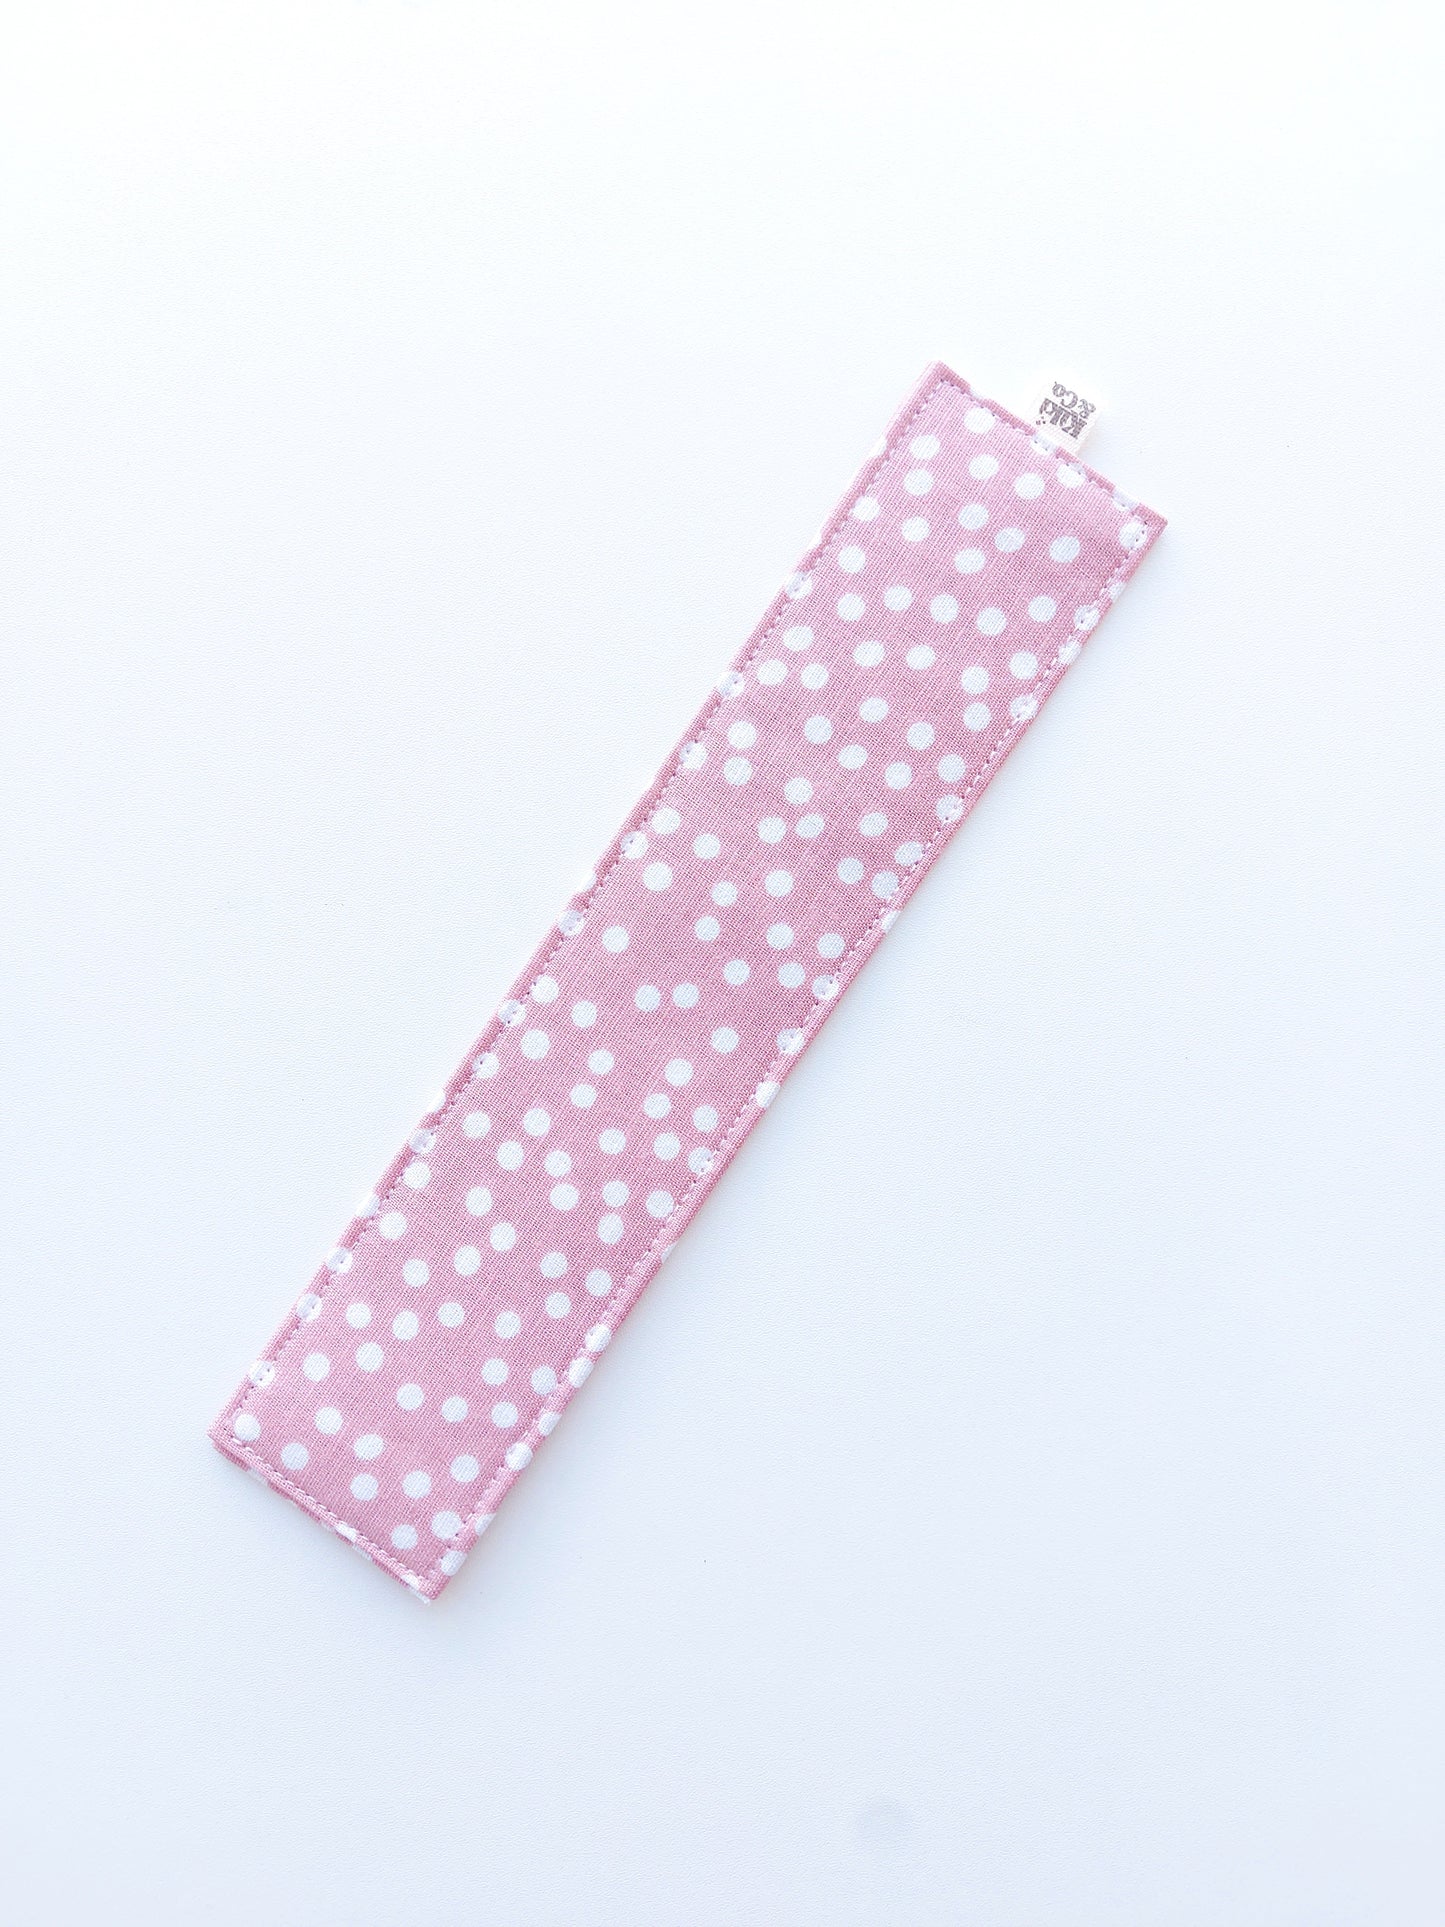 Bookmark - Spotty pink